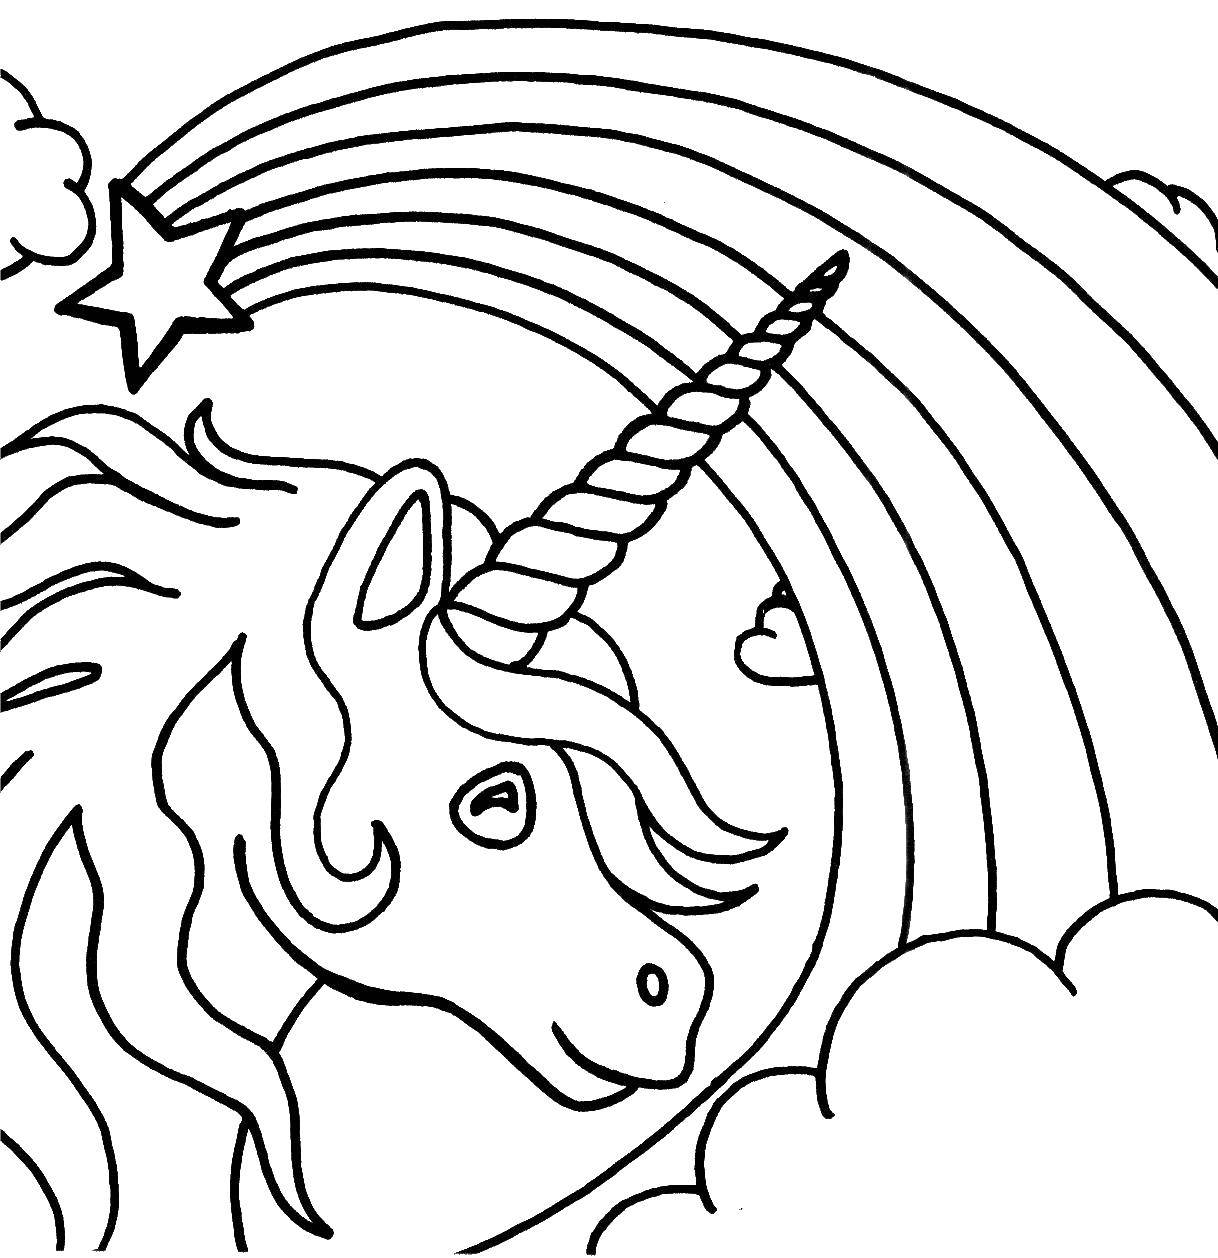 Coloring Unicorn and rainbow.. Category unicorns. Tags:  Animals, unicorn.